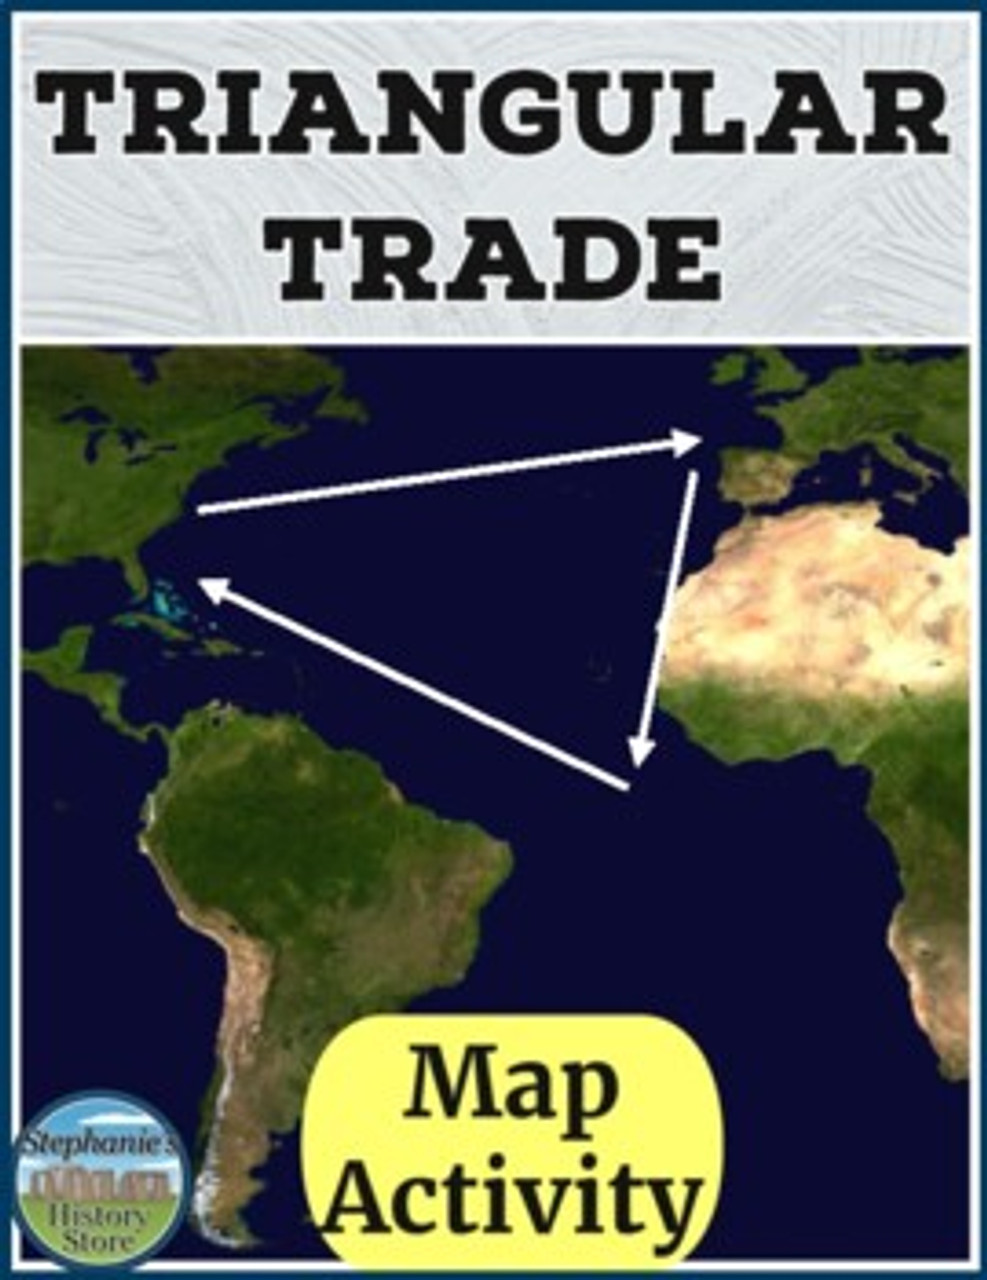 printable triangle slave trade